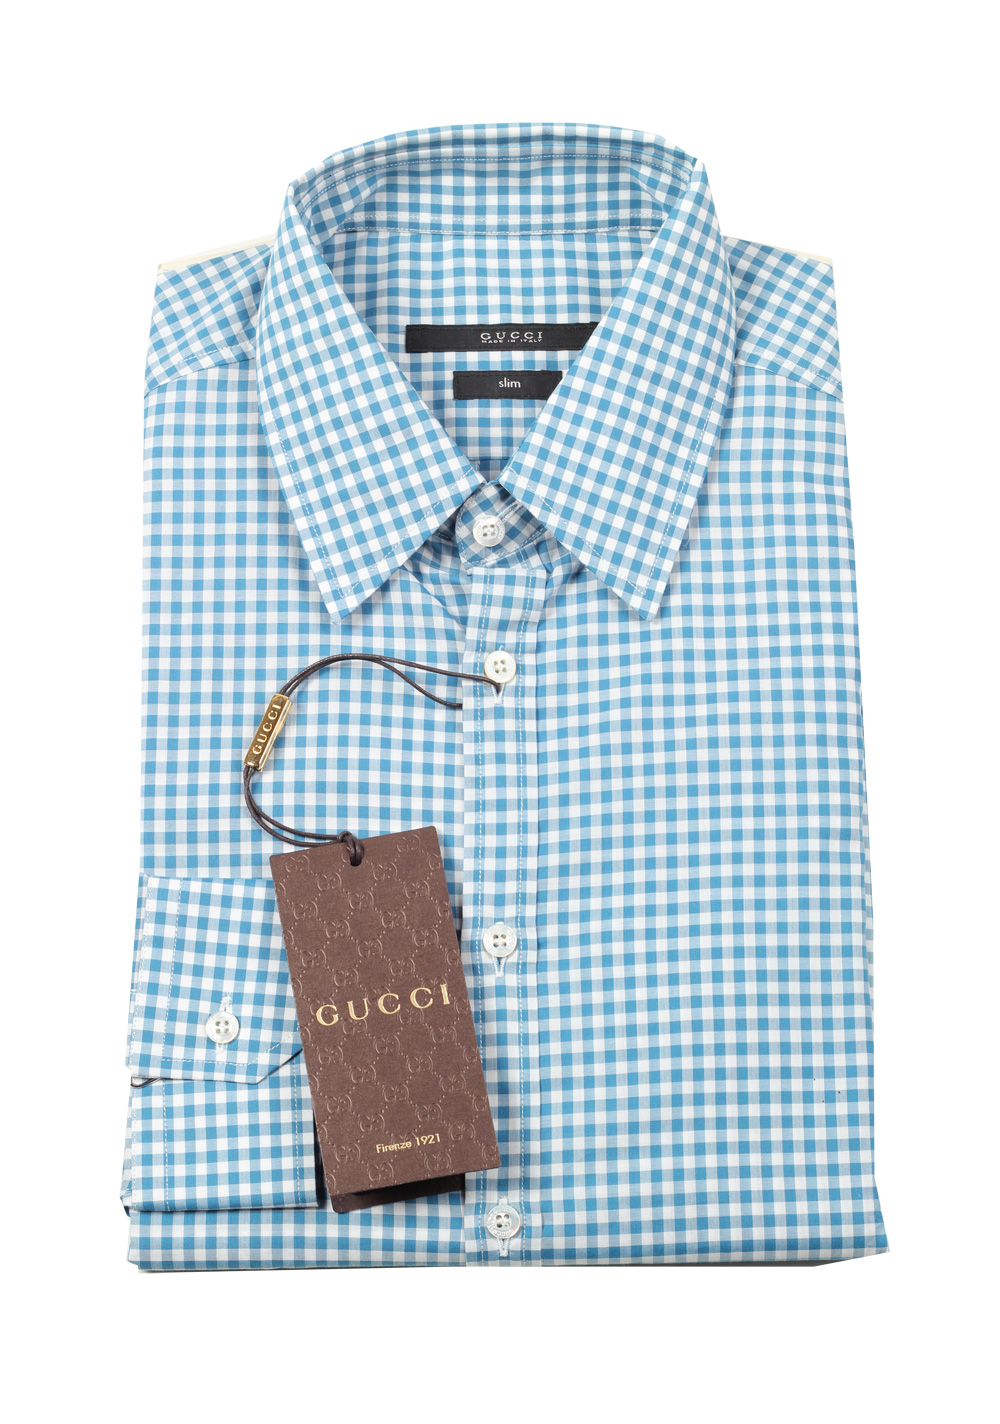 Gucci Checked Blue Dress Shirt Size 41 / 16 U.S. Slim | Costume Limité